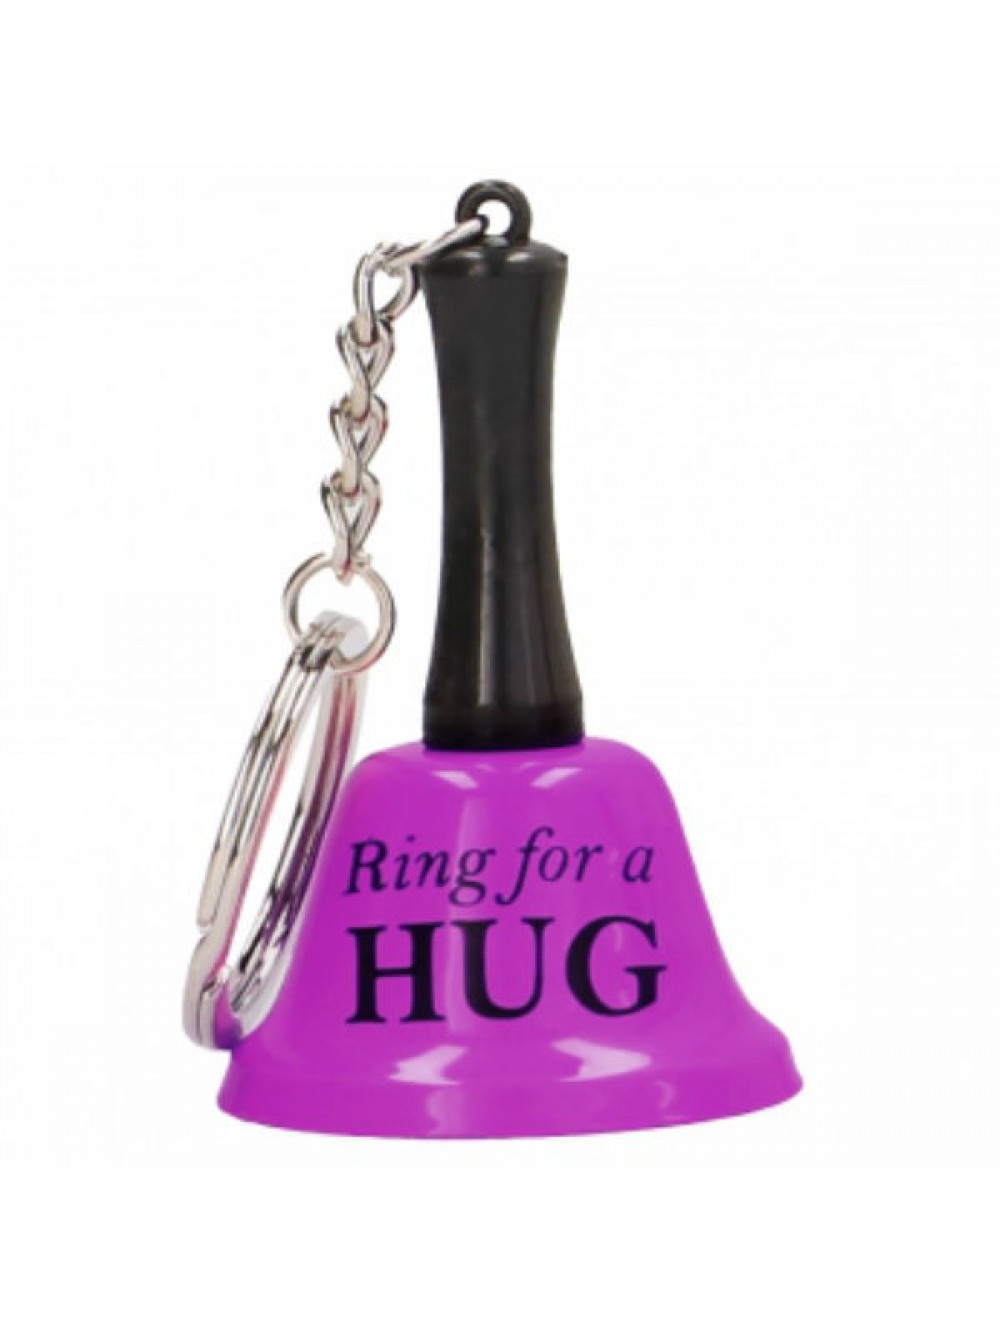 RING FOR A HUG PURPLE KEYRING 8714273941442